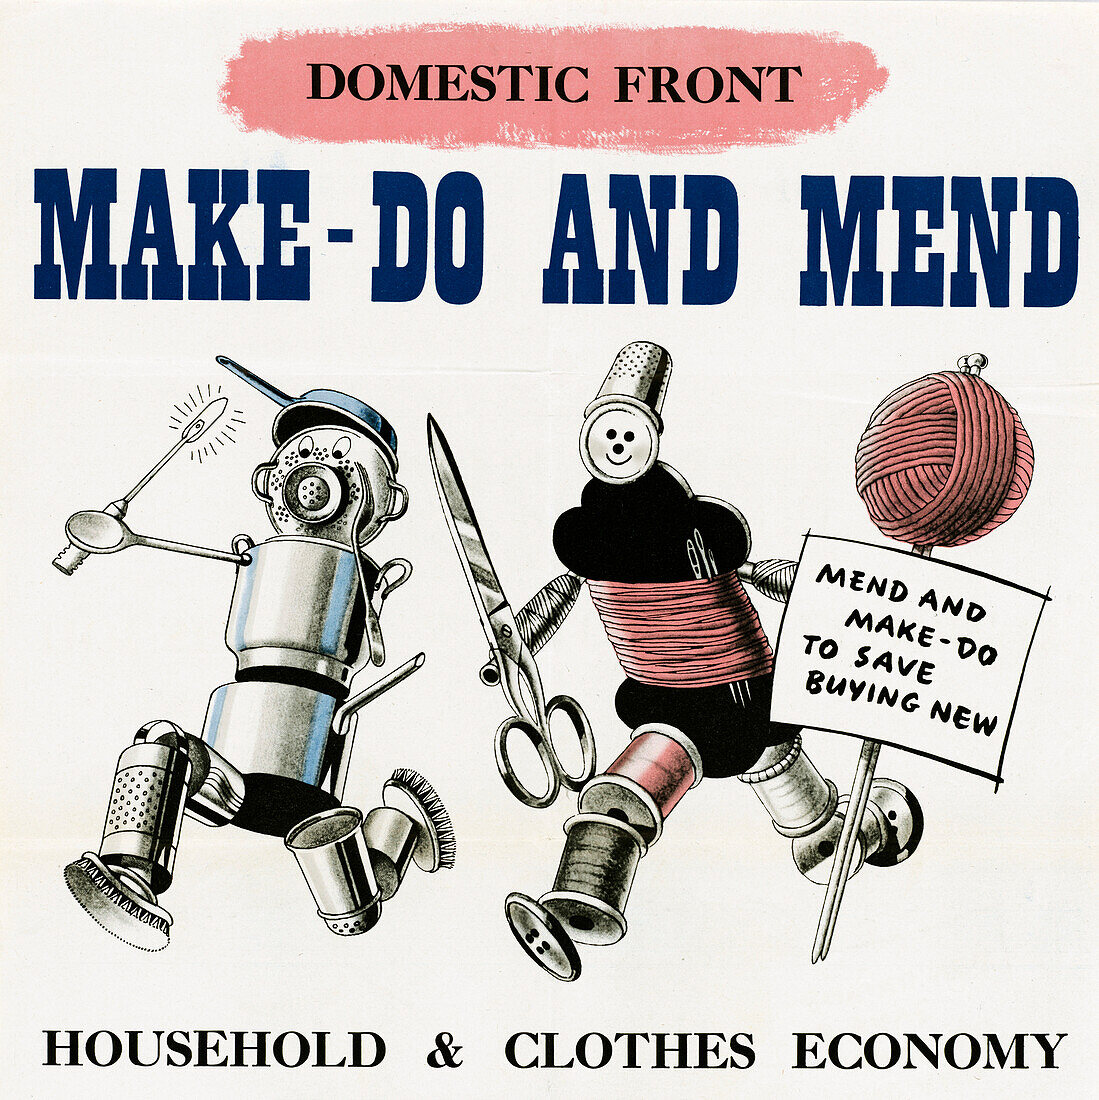 Make-Do and Mend, World War II poster